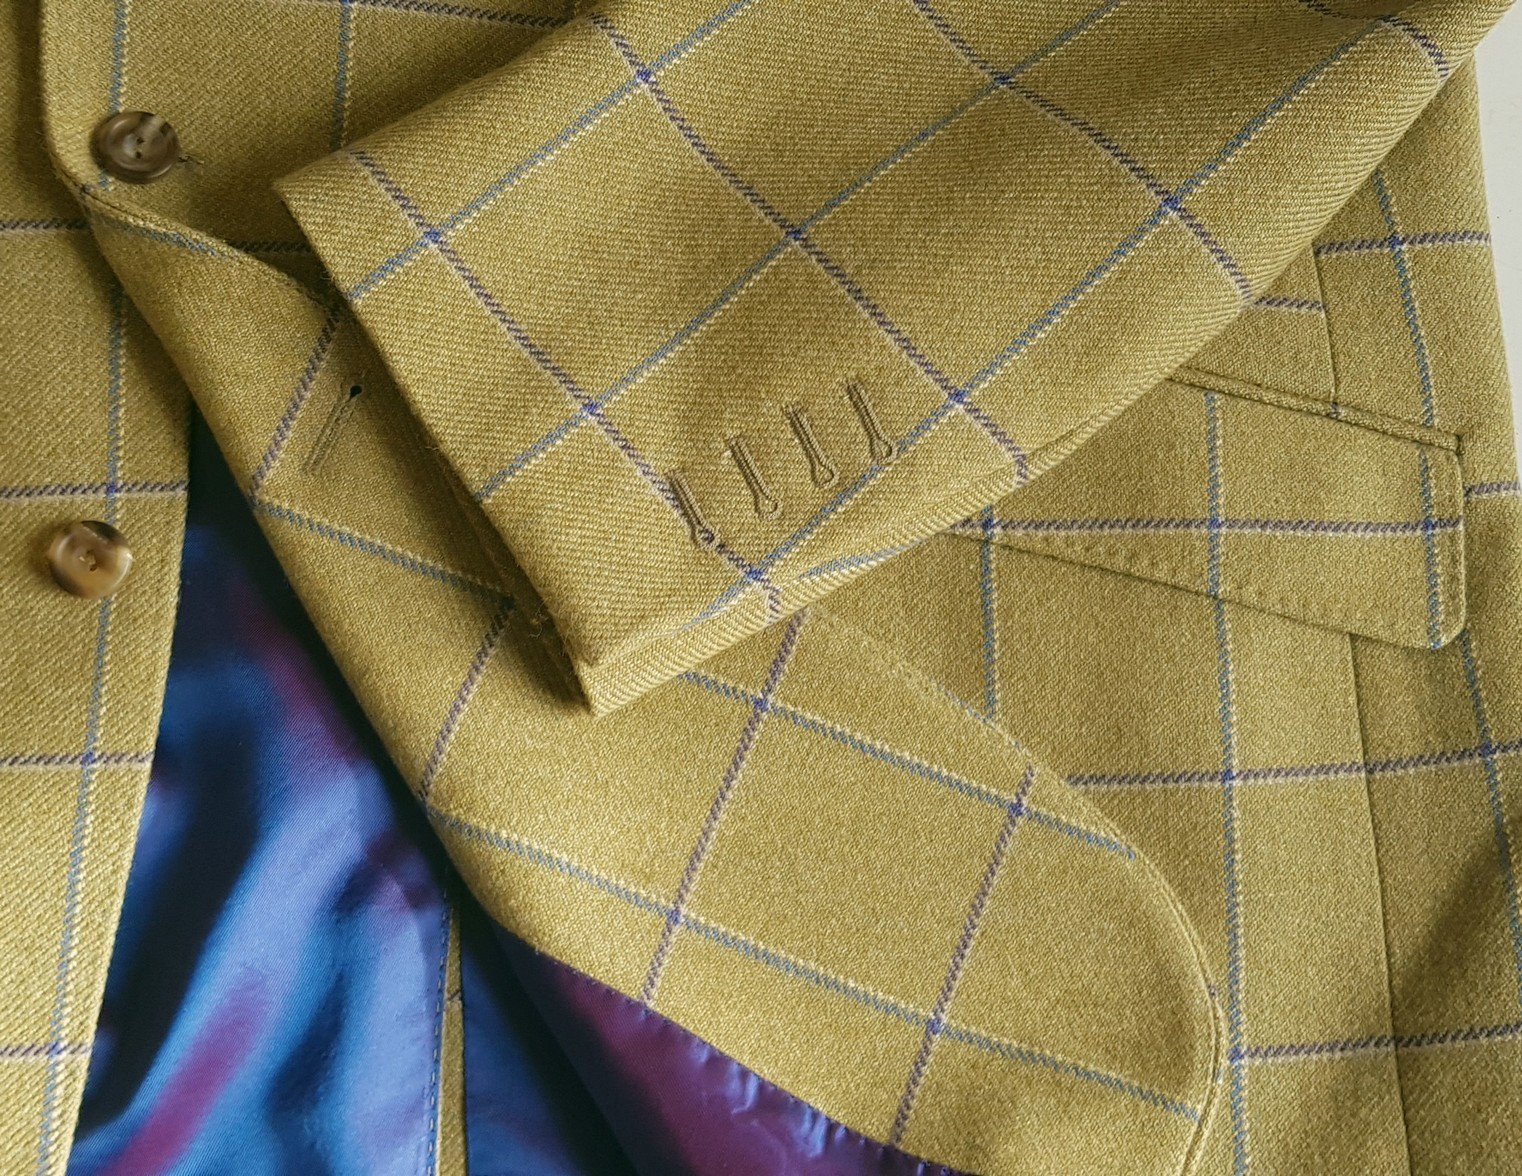 Tweed jacket in Porter and Harding Hartwist (11).jpg